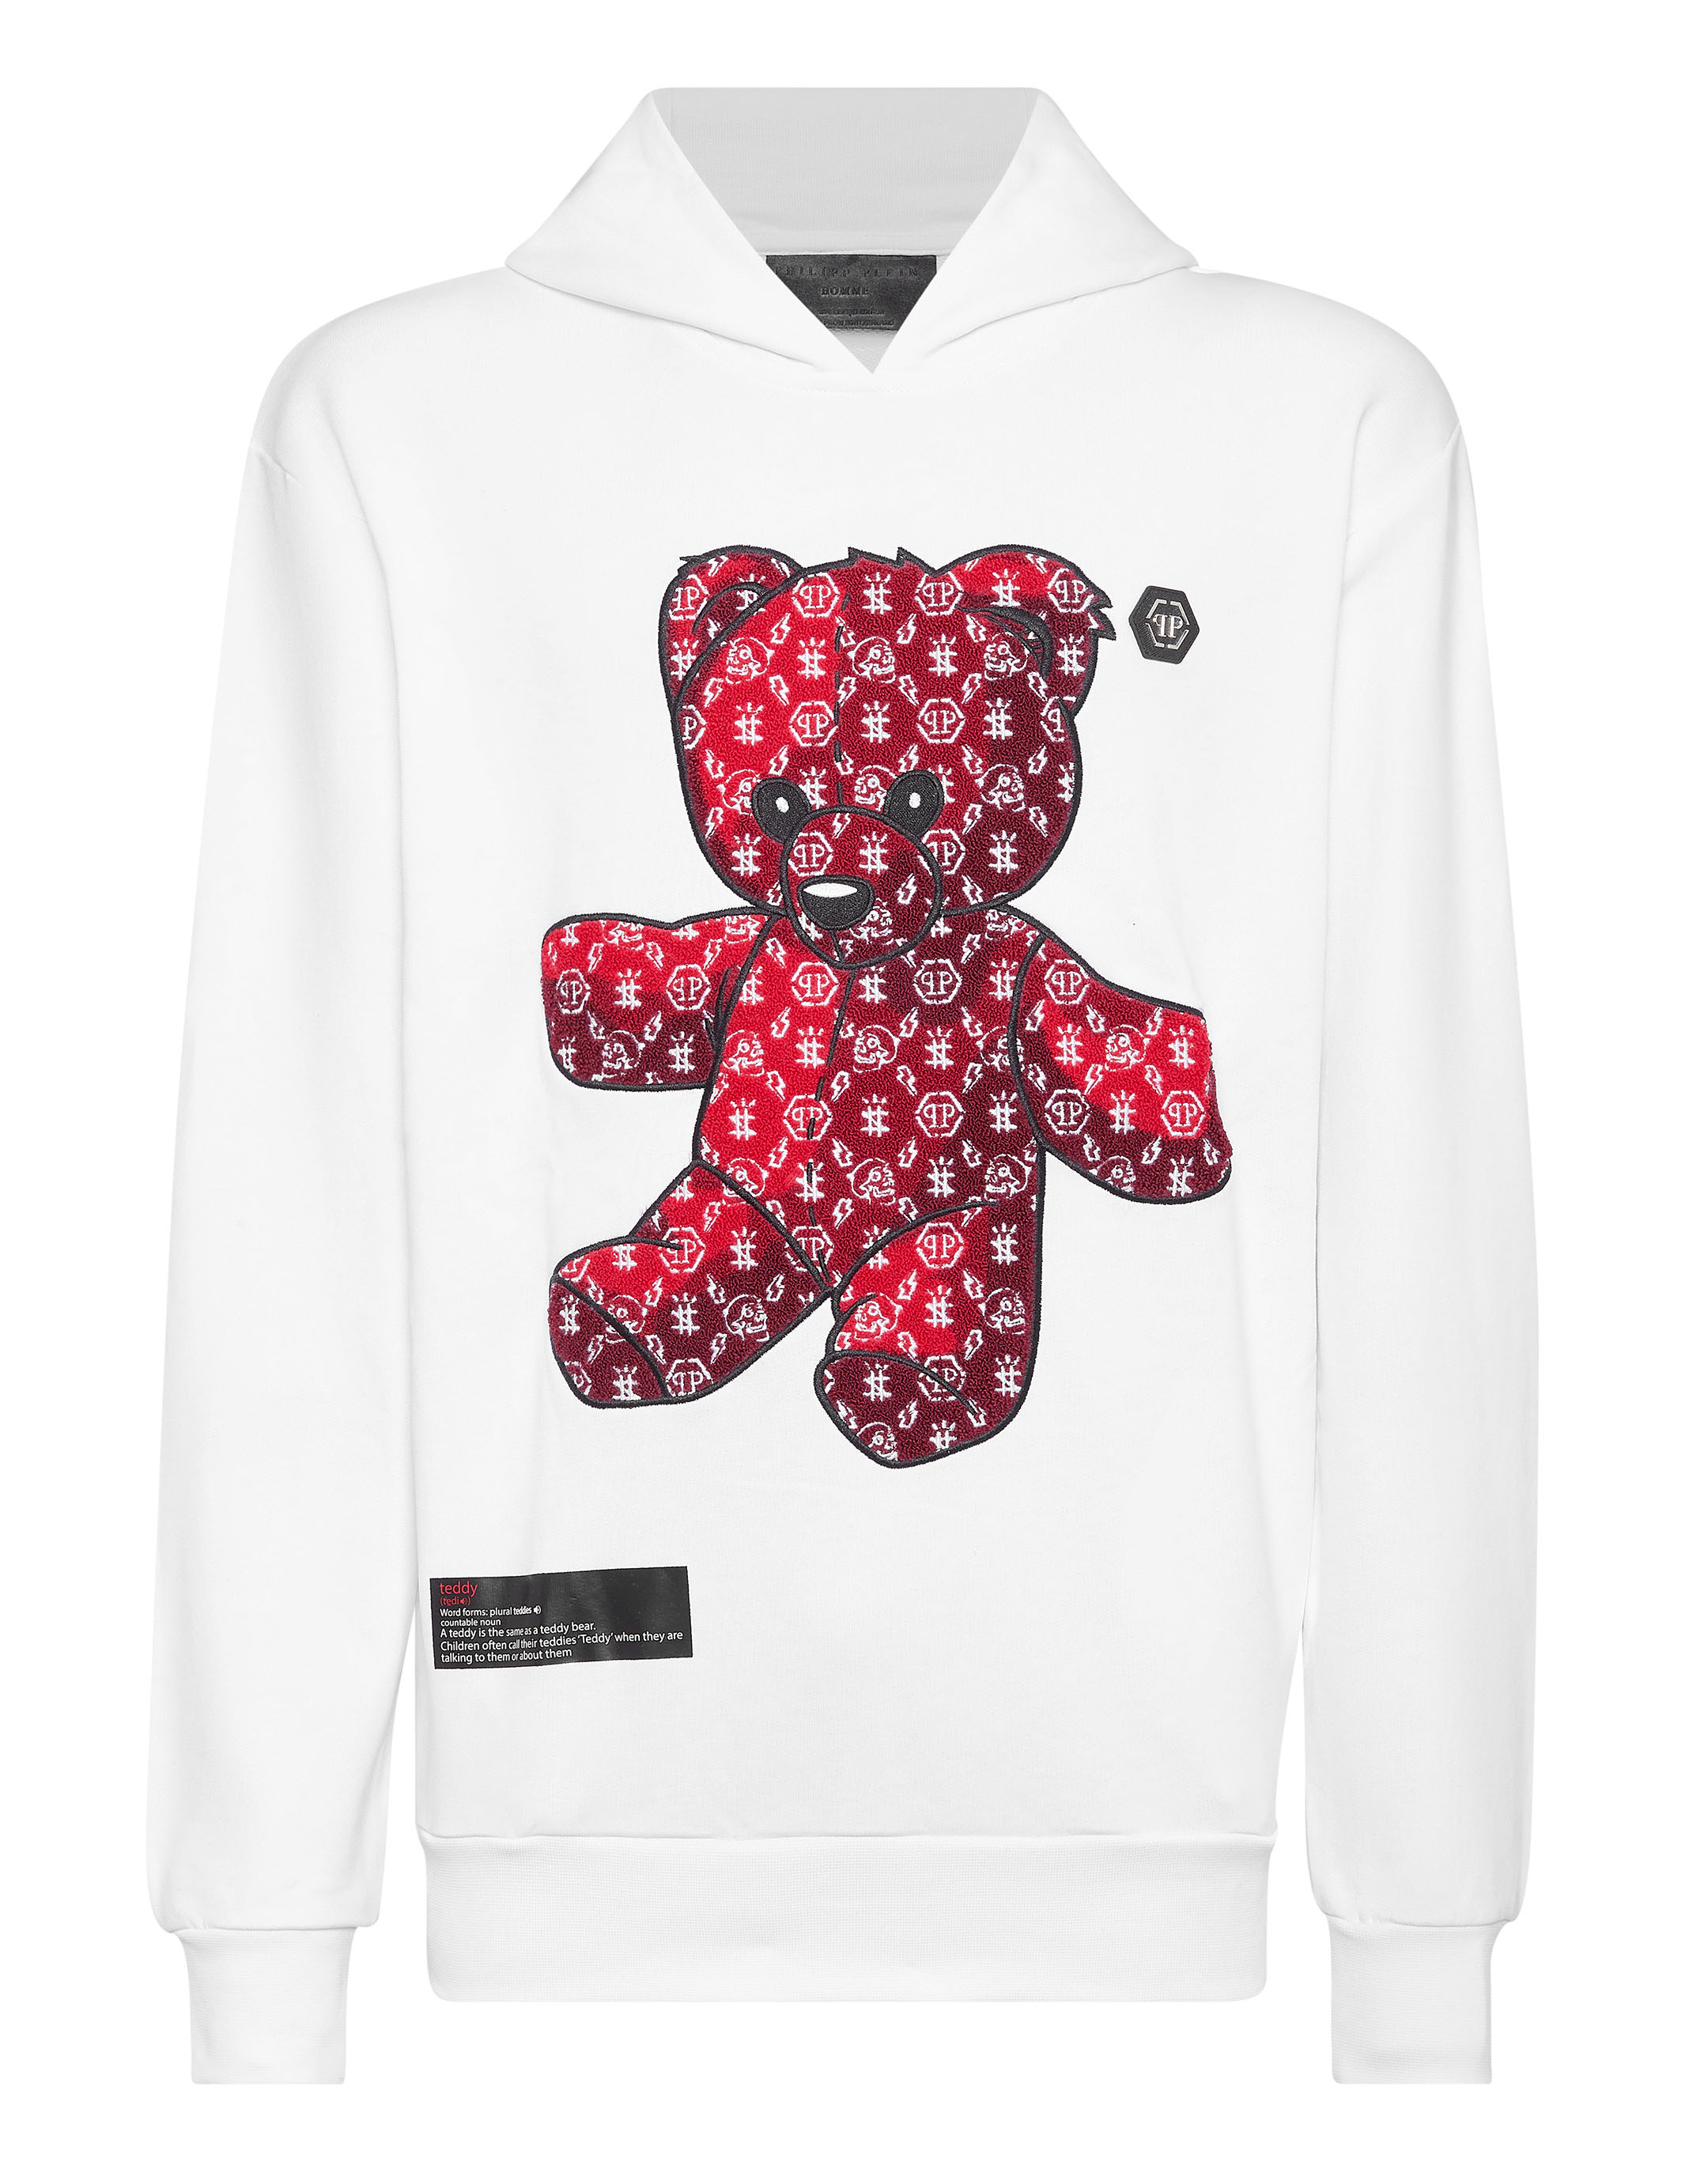 philipp plein teddy bear sweater